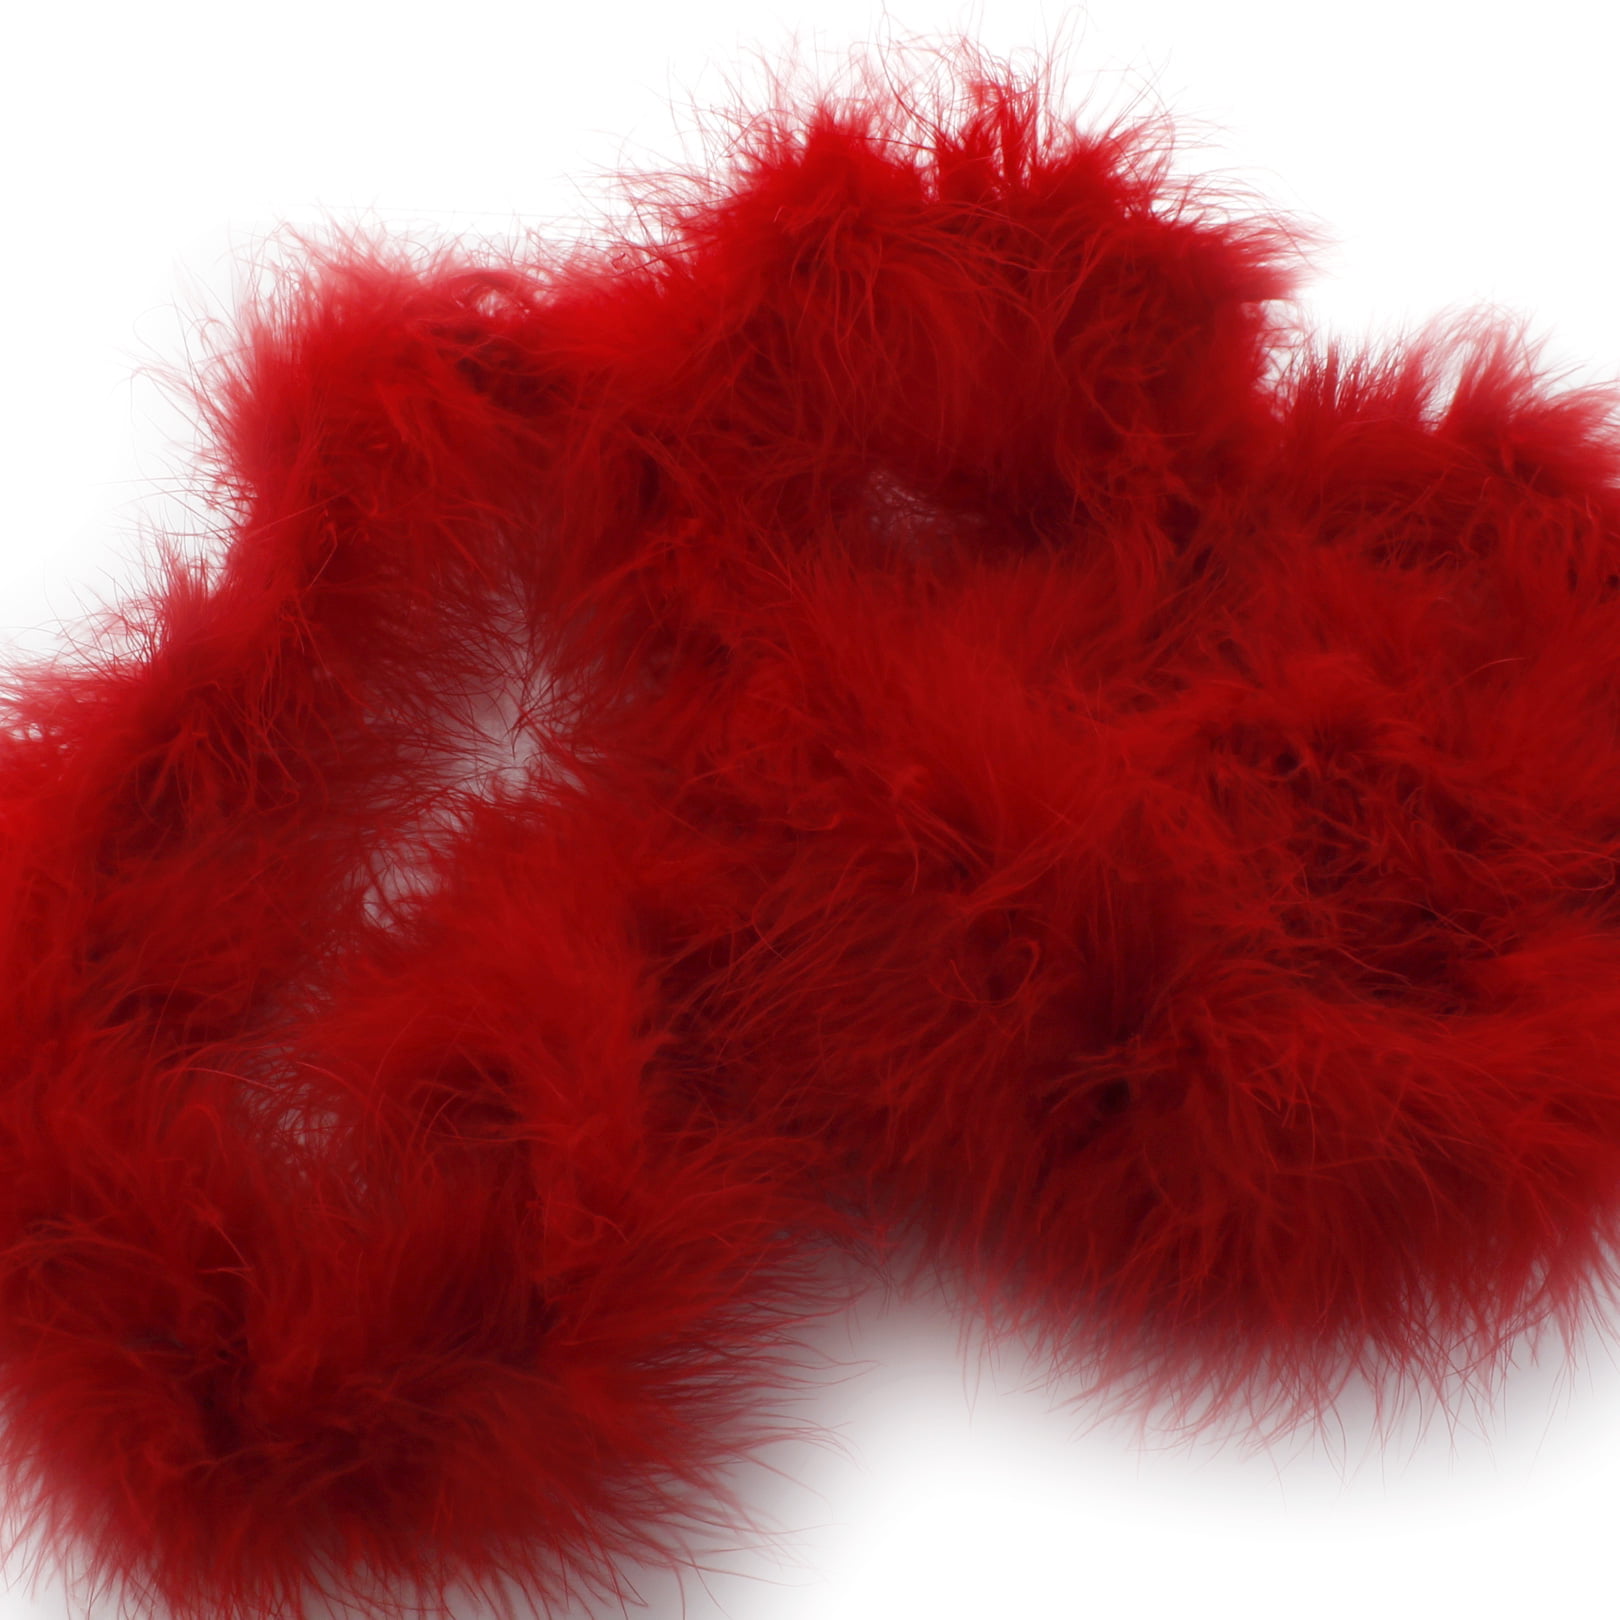 Zucker Marabou Feathers .25oz Red